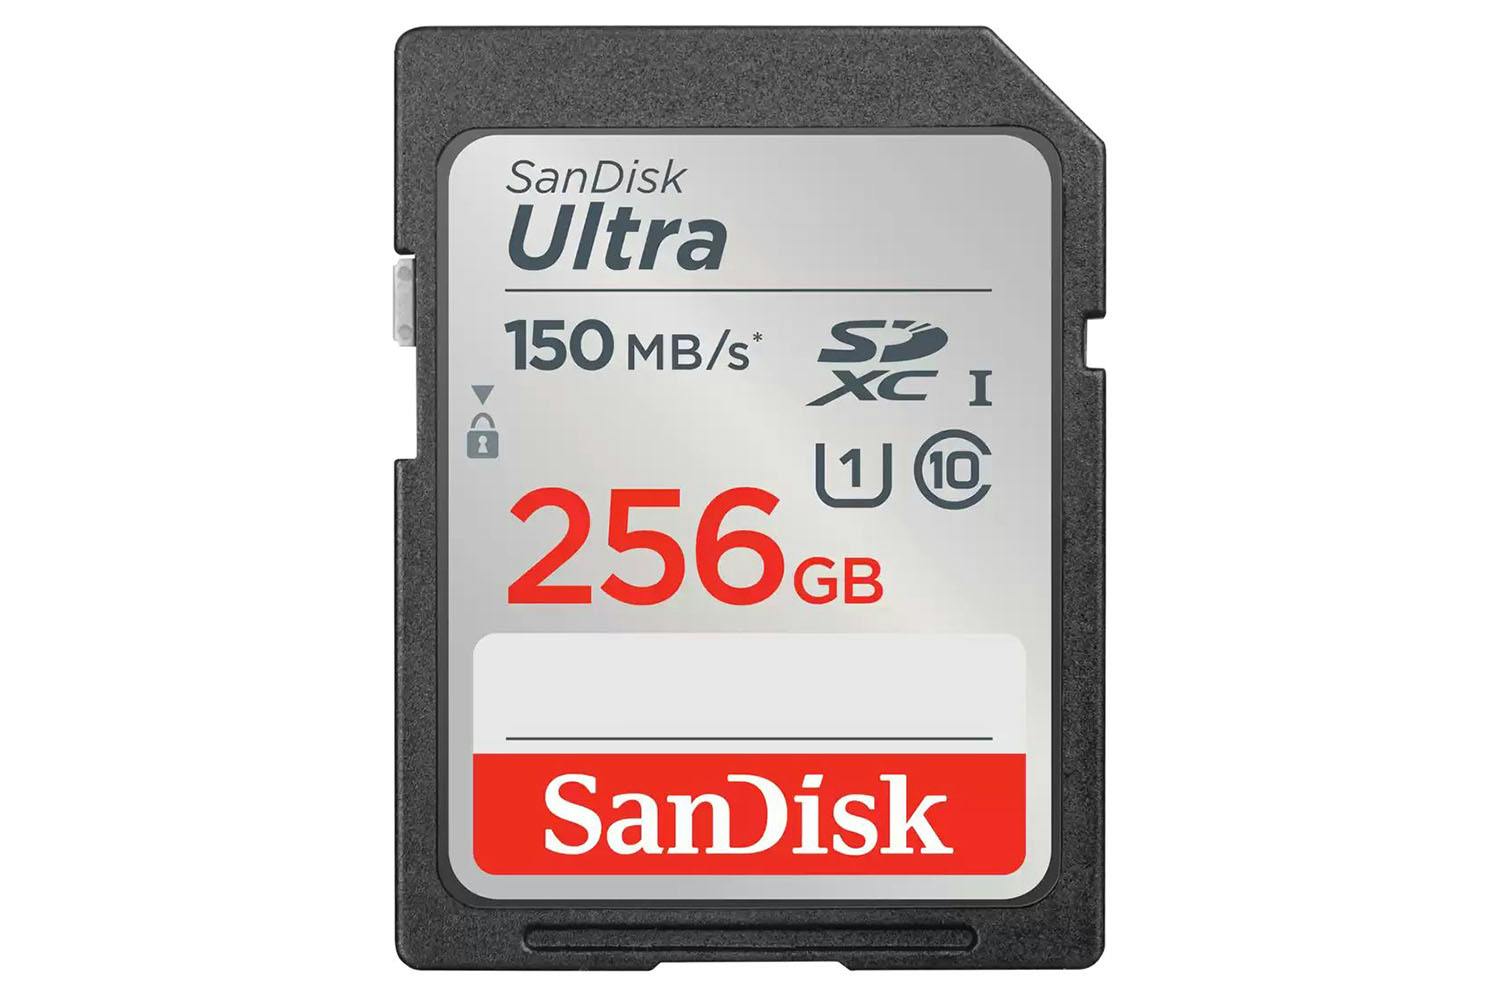 SanDisk Ultra SDHC UHS-I and SDXC UHS-I Memory Card | 256GB